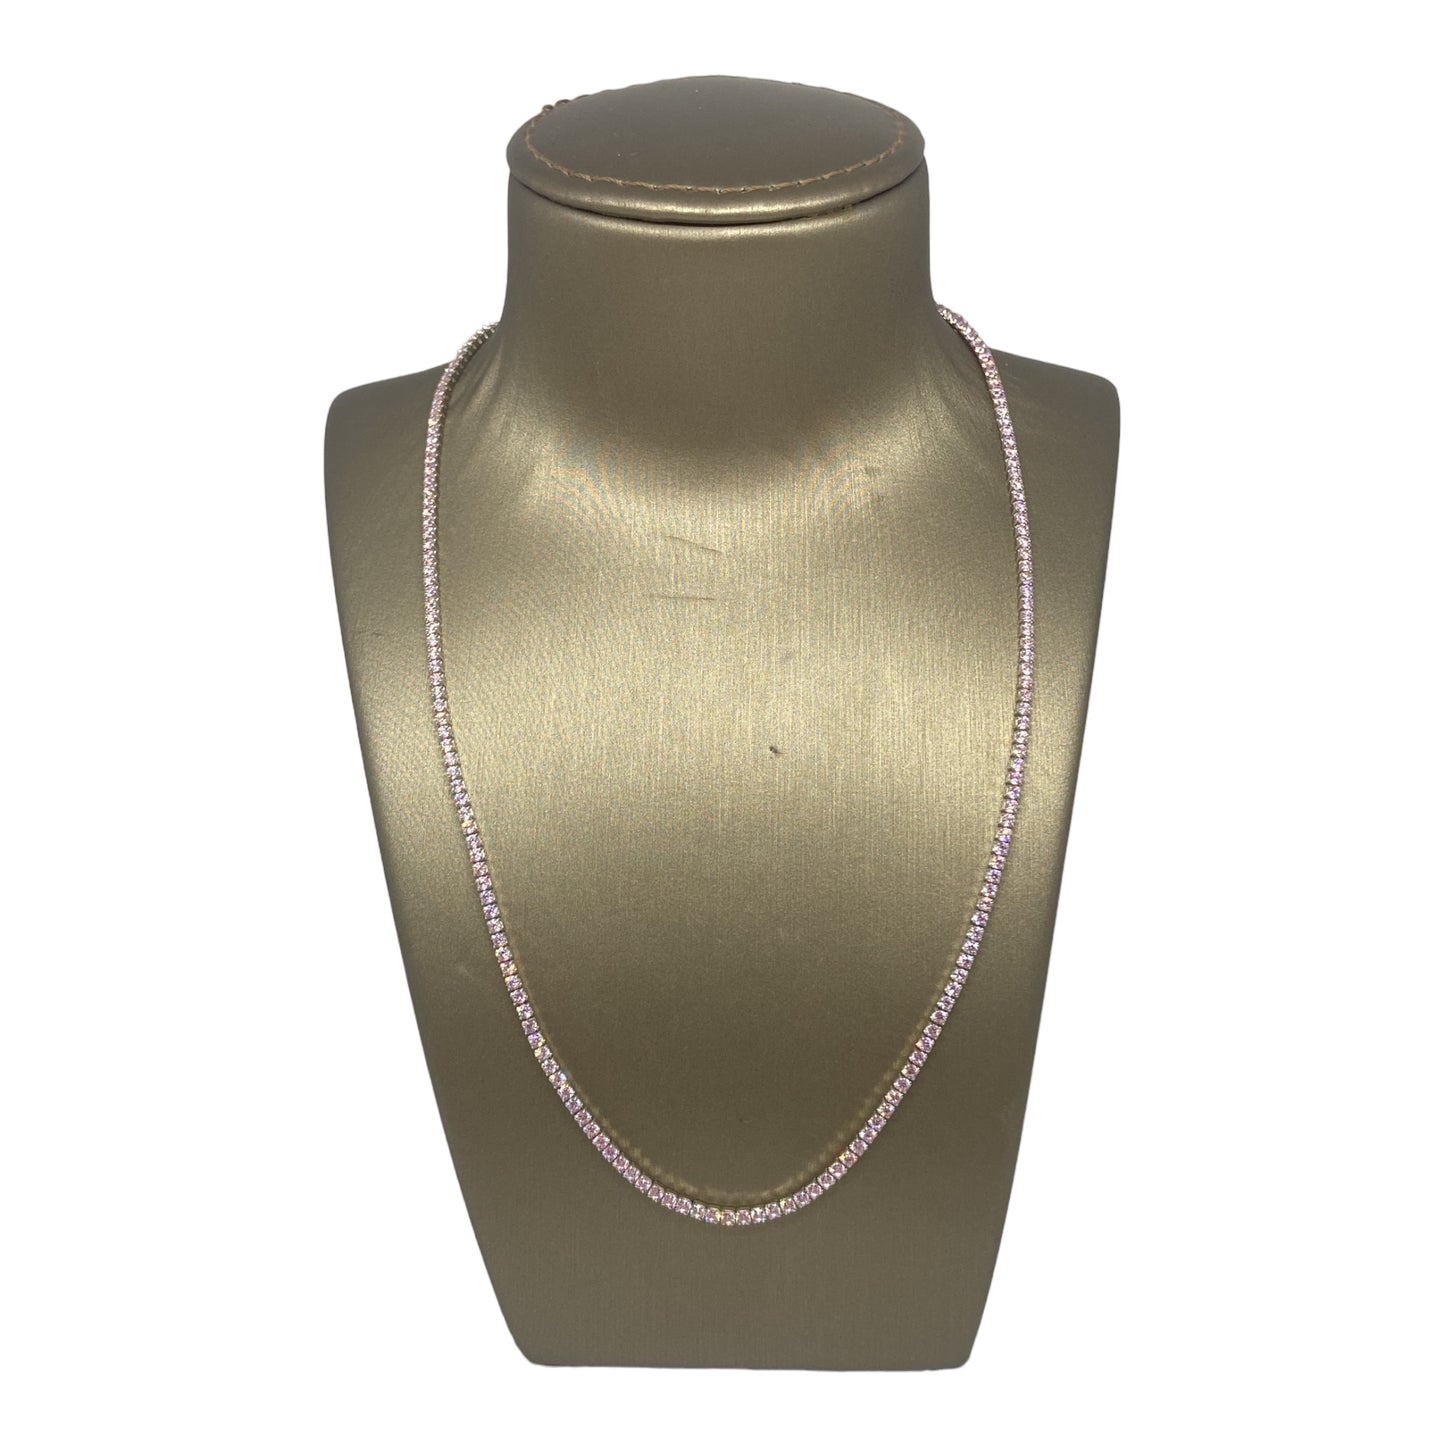 Silver Tennis Necklace with Pink Stones-سلسال تنس فضة بأحجار زهرية